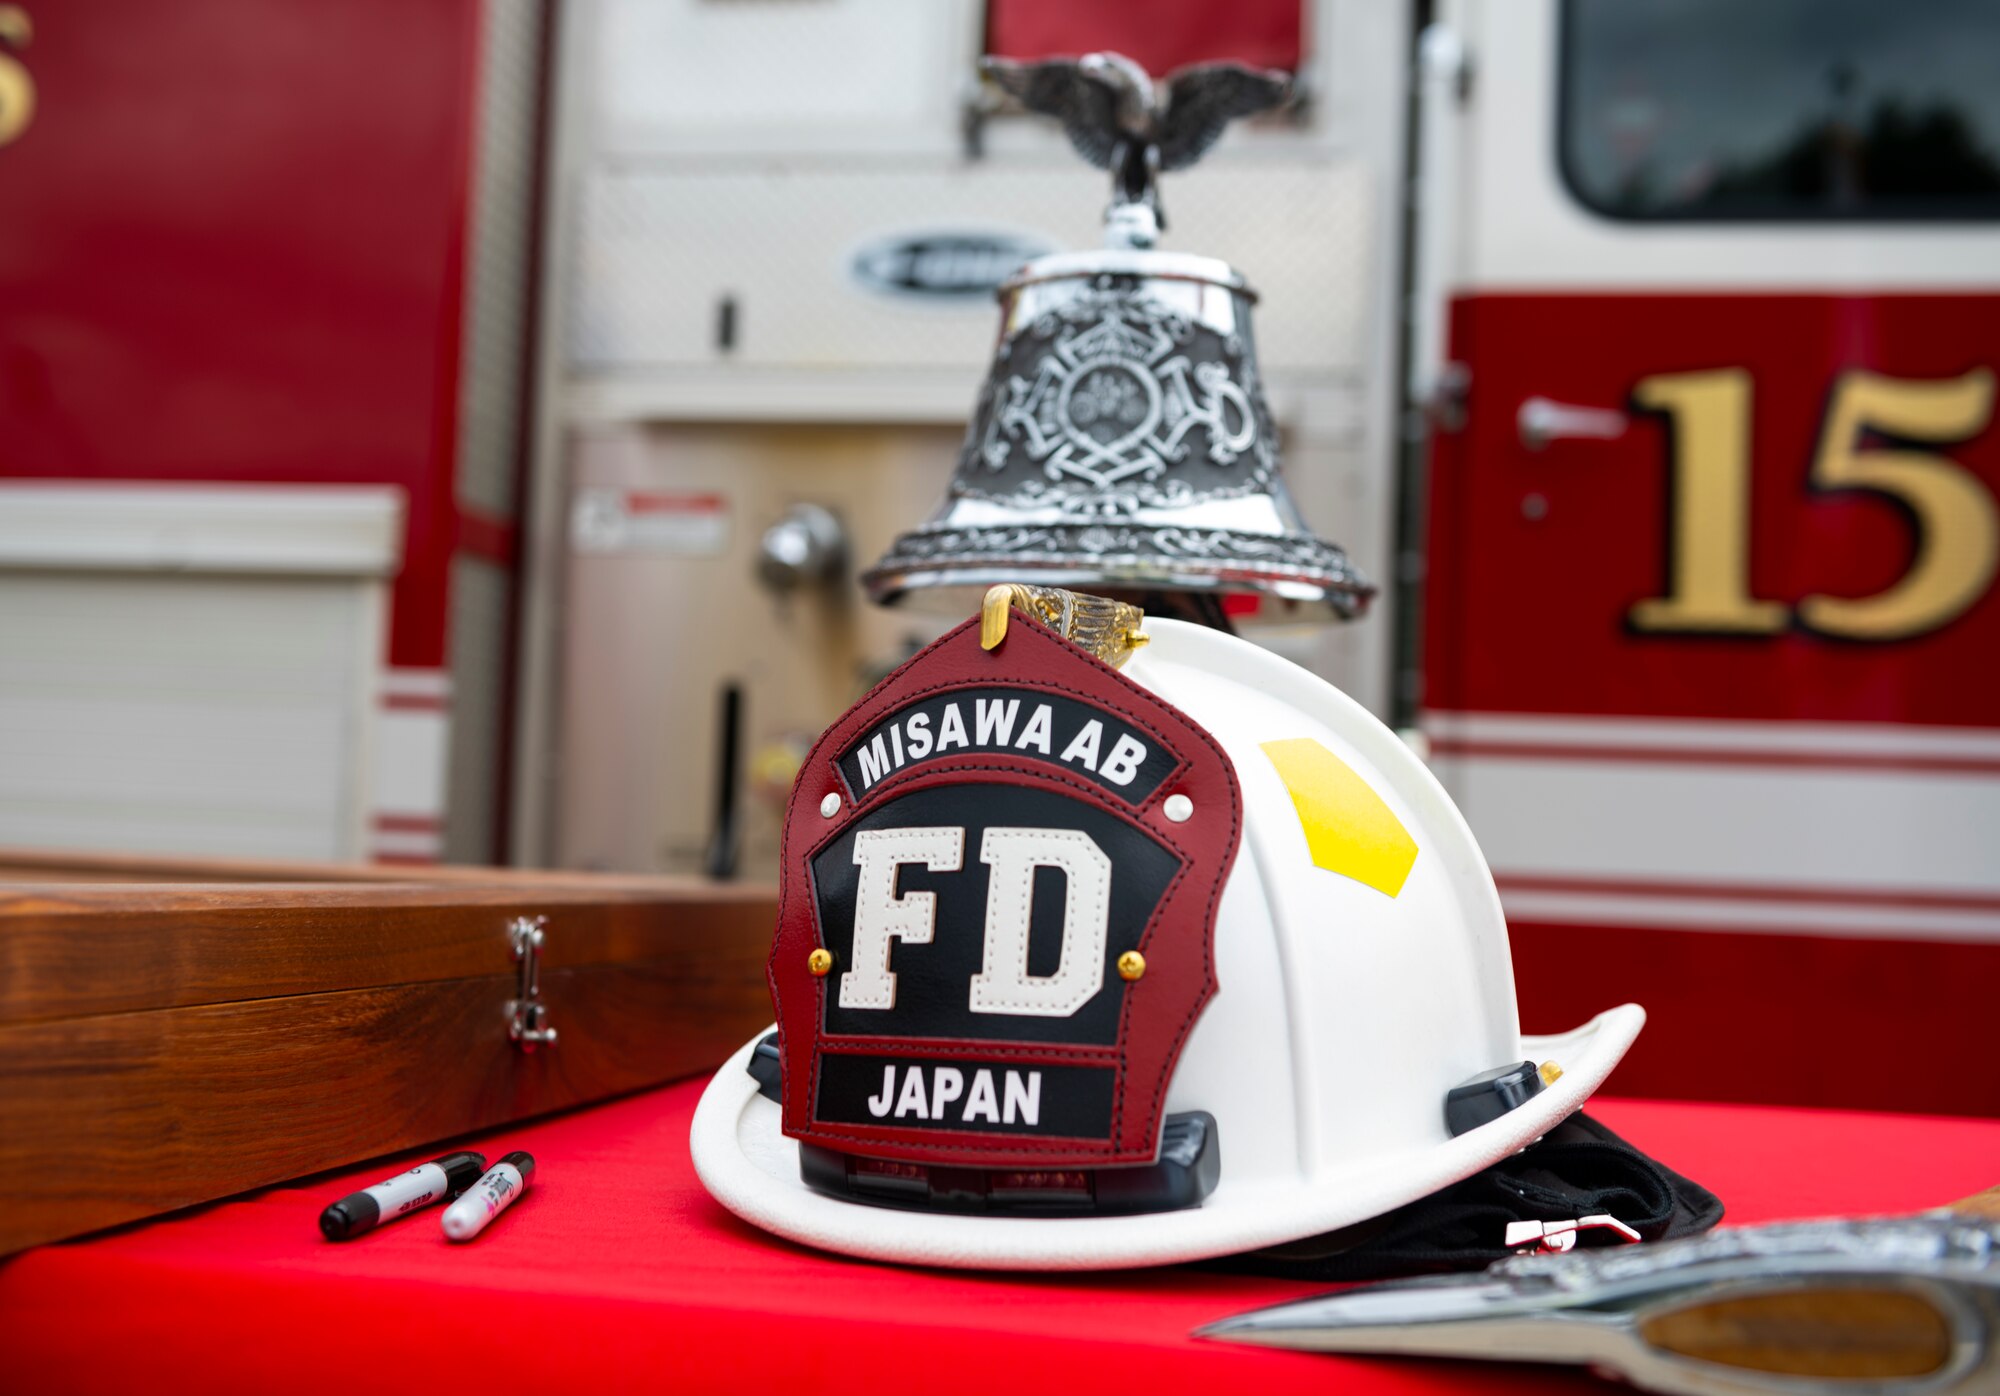 A U.S. Air Force fire department helmet being displayed at Misawa Air Base, Japan.